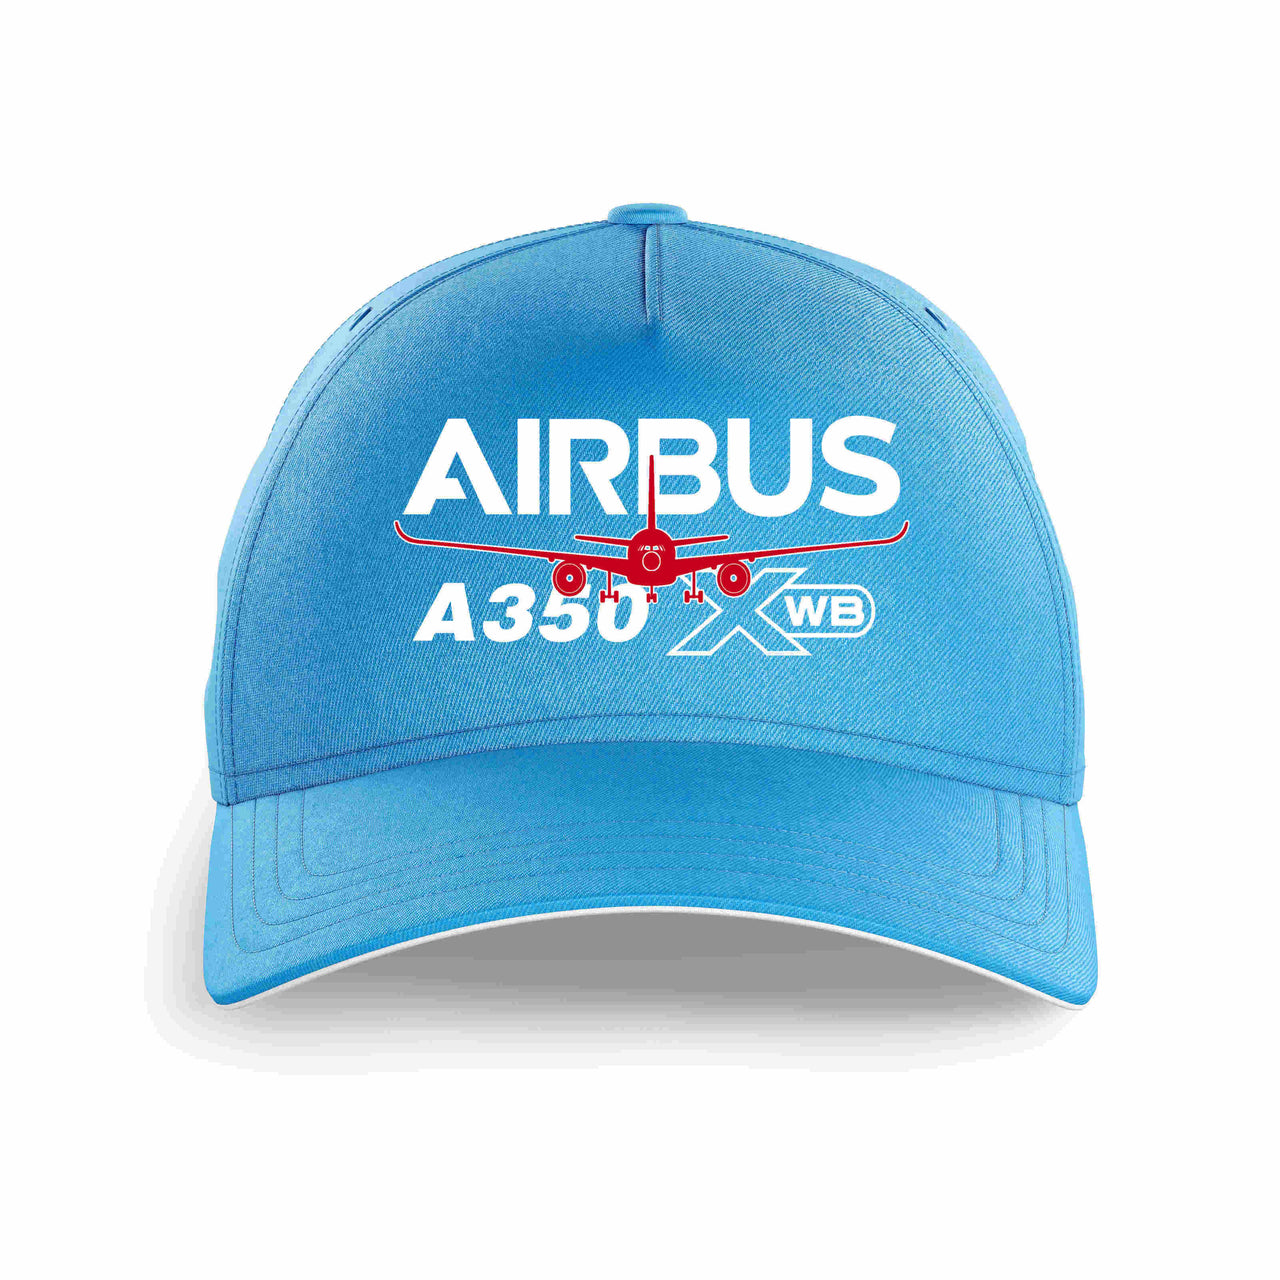 Amazing Airbus A350 XWB Printed Hats